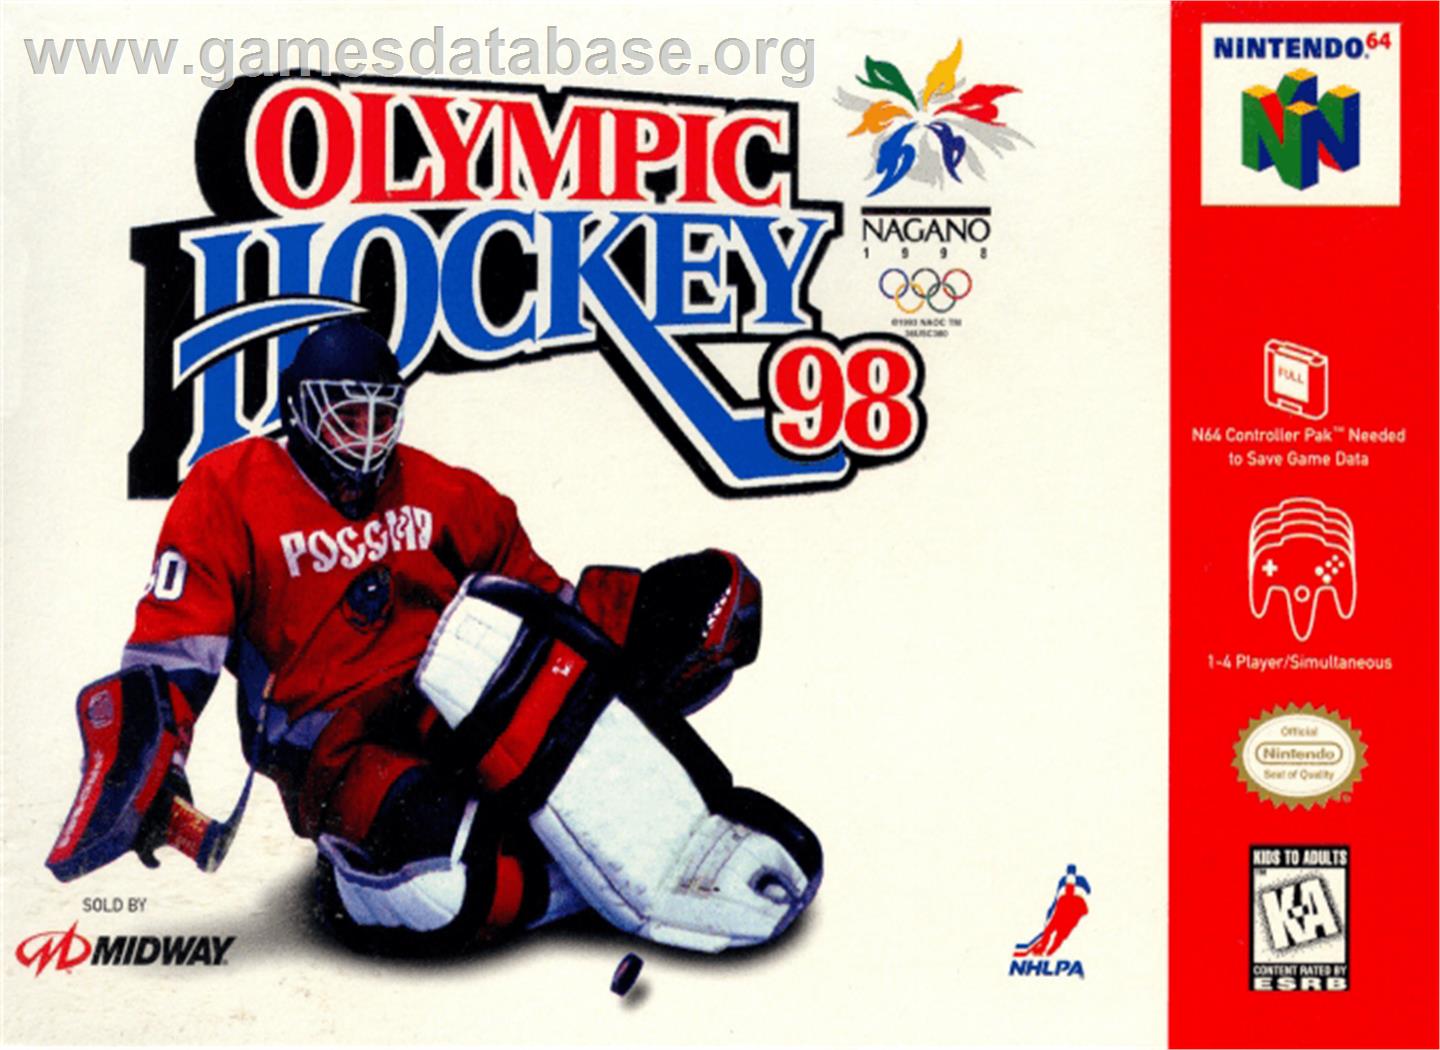 Olympic Hockey Nagano '98 - Nintendo N64 - Artwork - Box